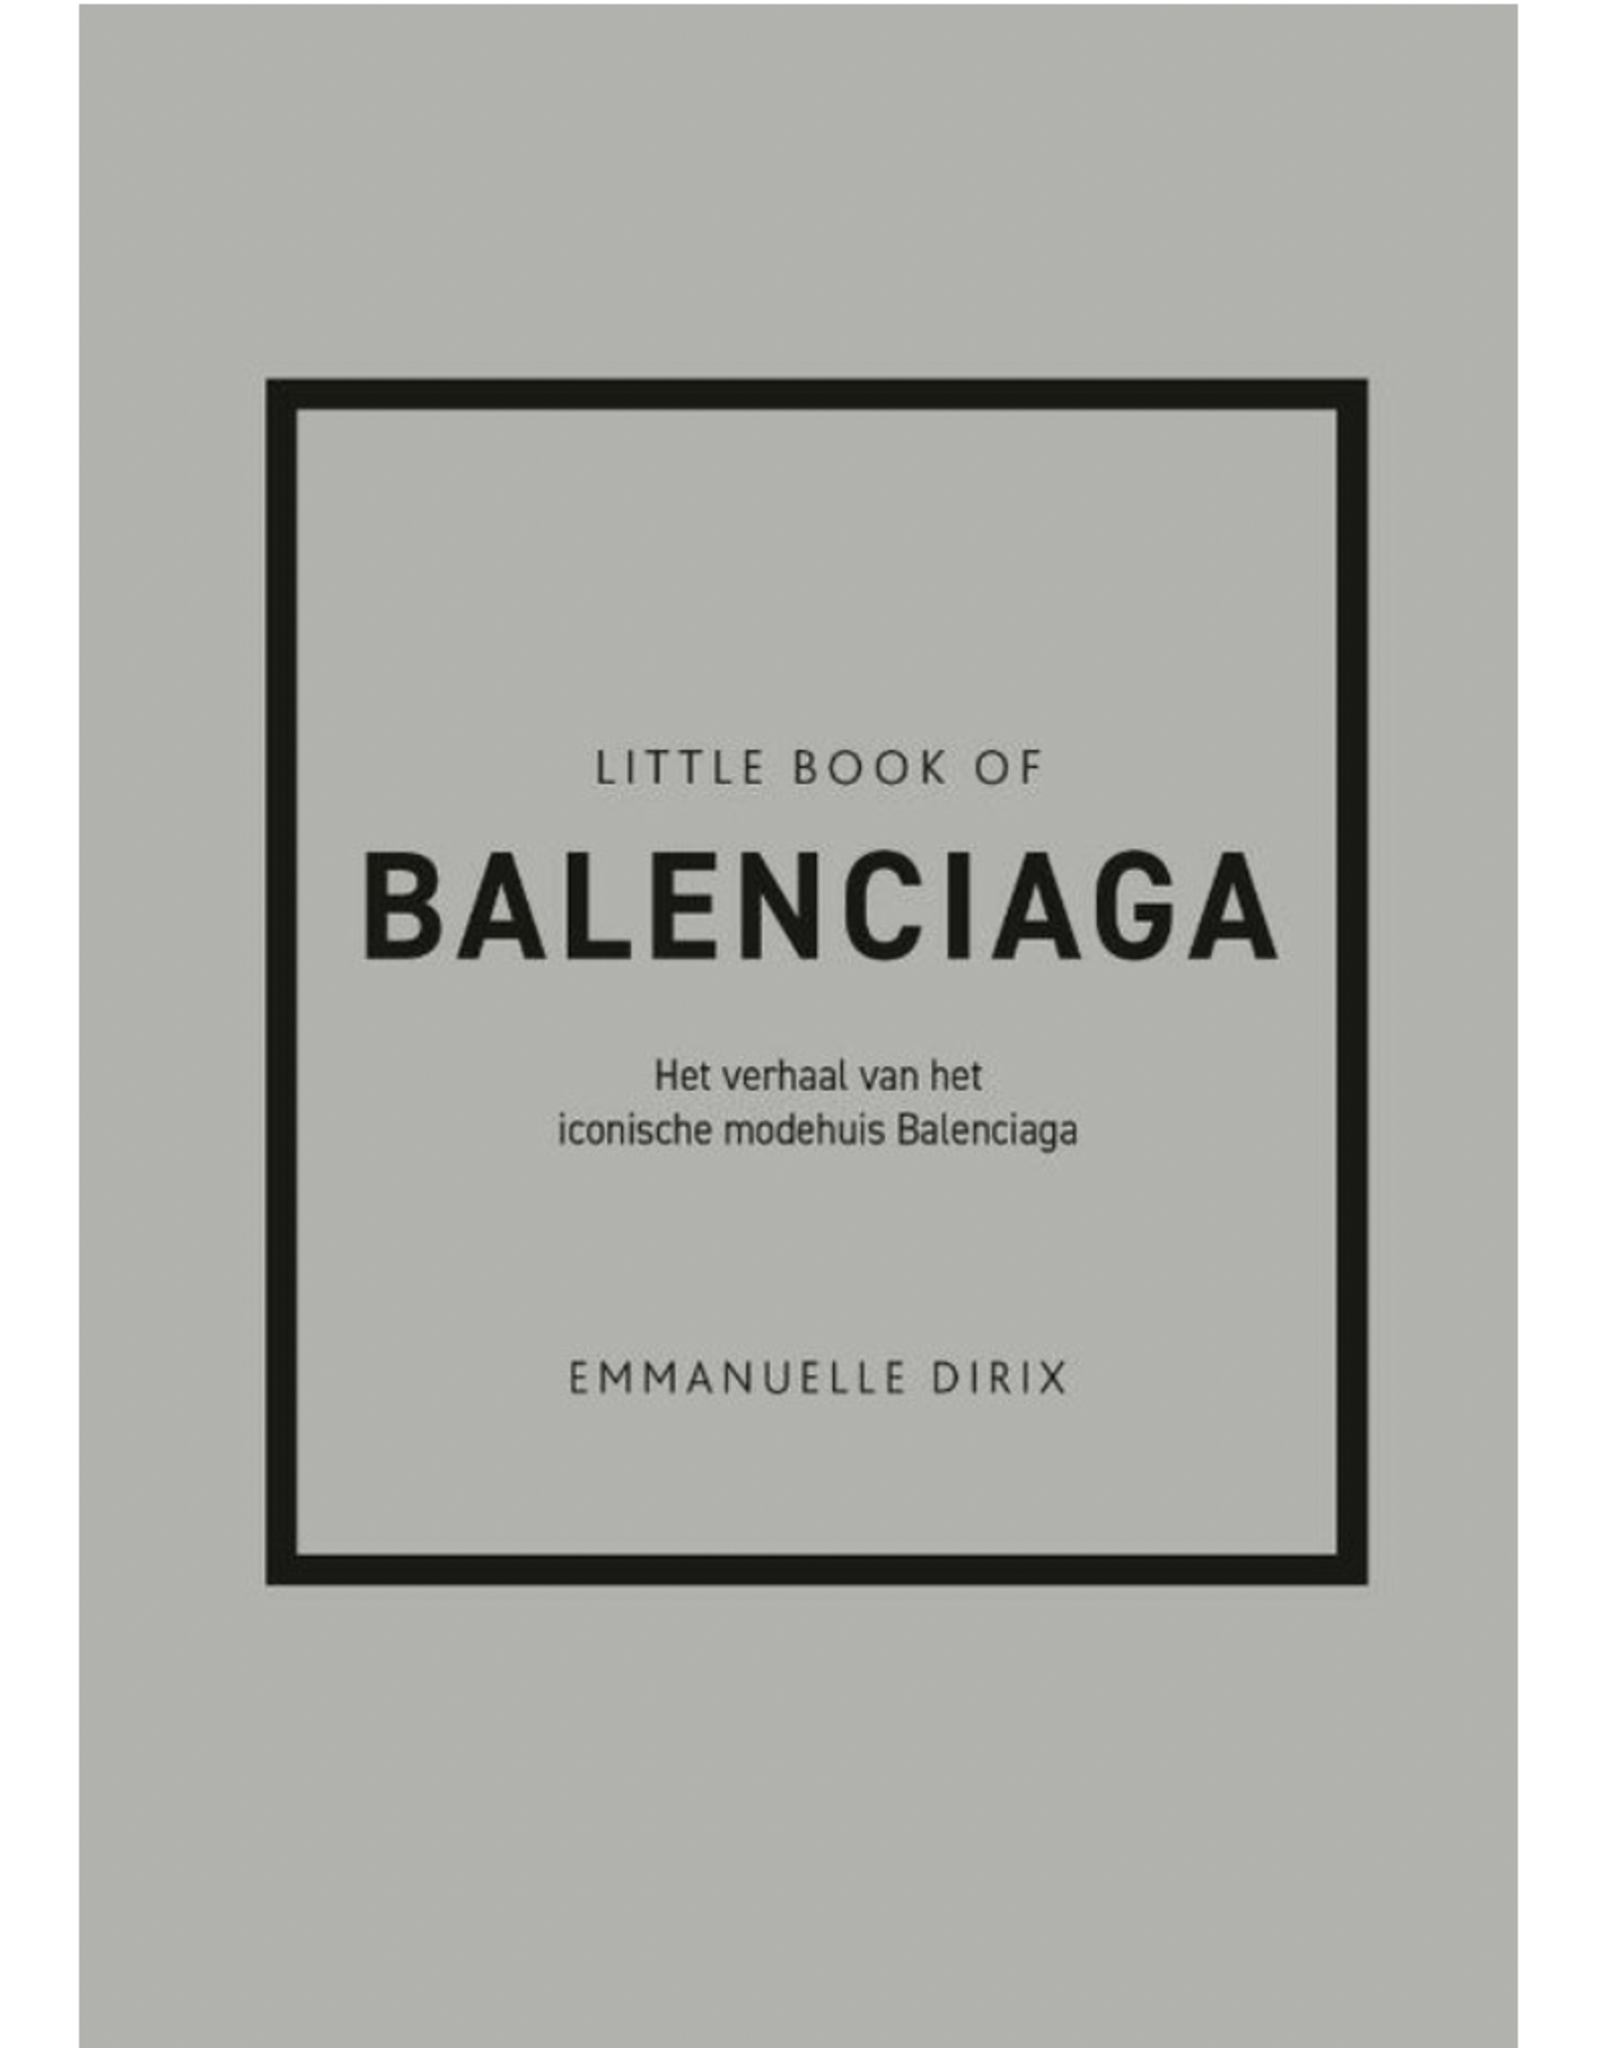 Kitchen Trend Little book of Balenciaga 18.99